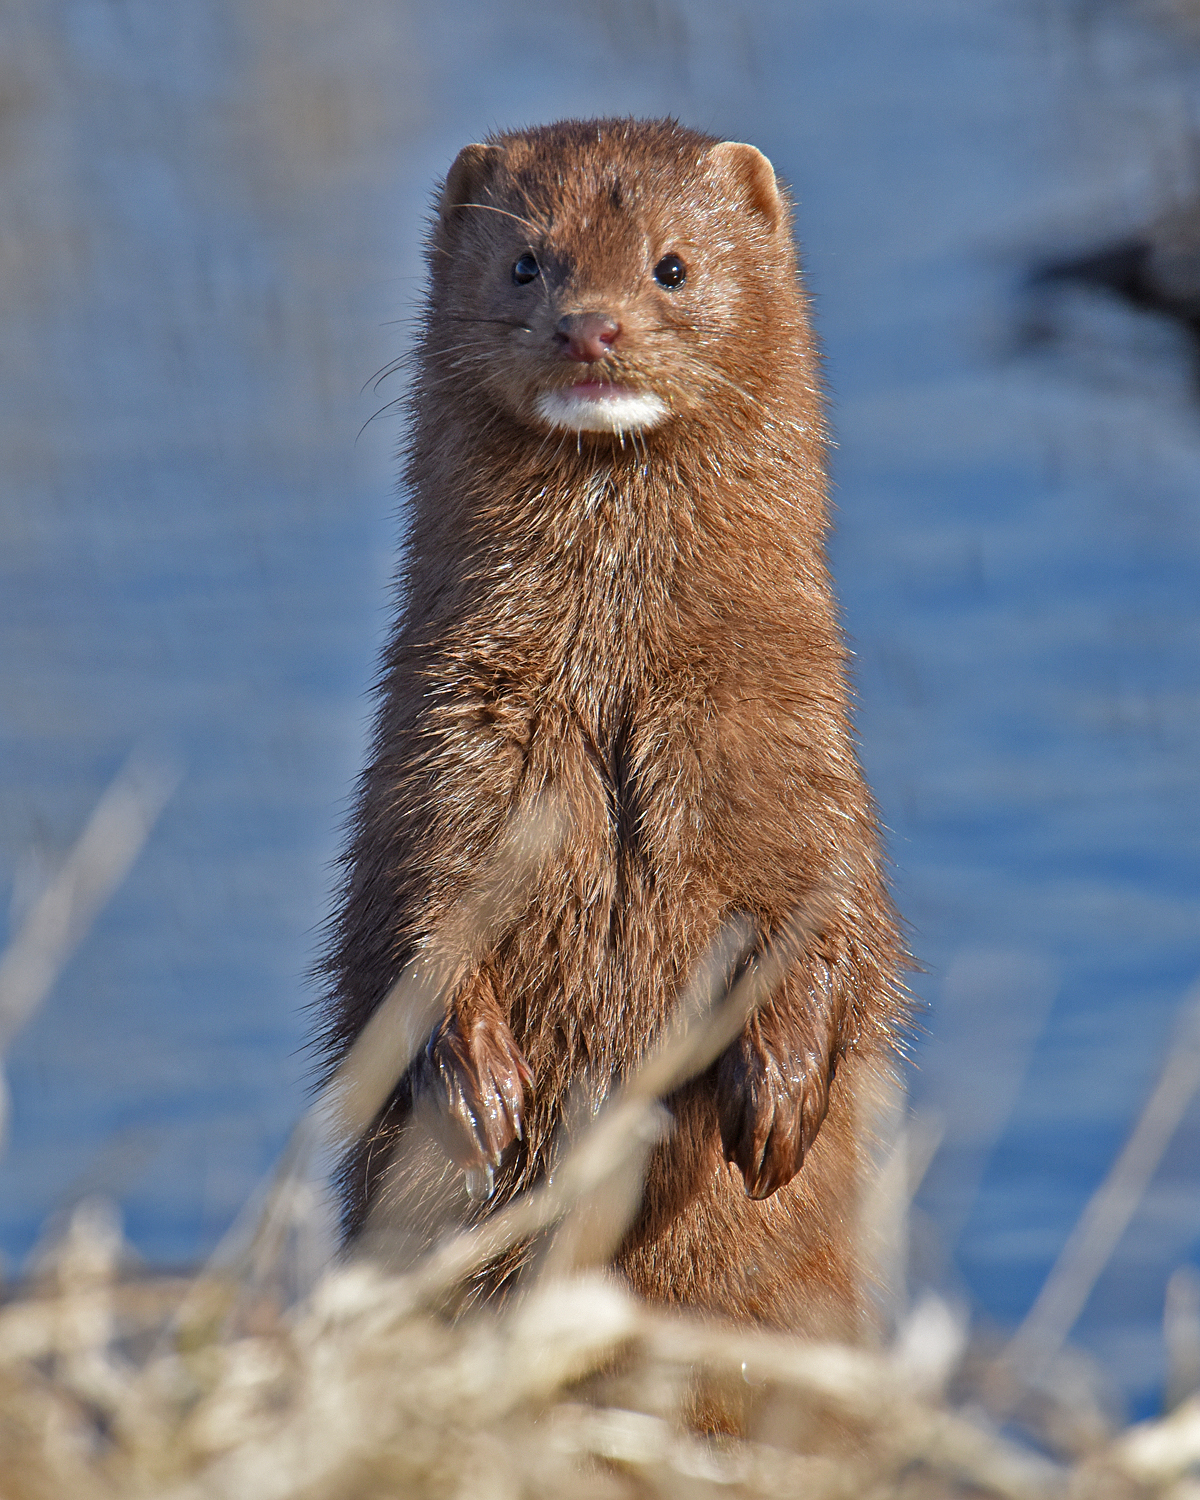 Photo courtesy of Ken Saunders II, taken March 18, 2016, at Otter Creek Marsh Wildlife Management Area in Tama County, Iowa